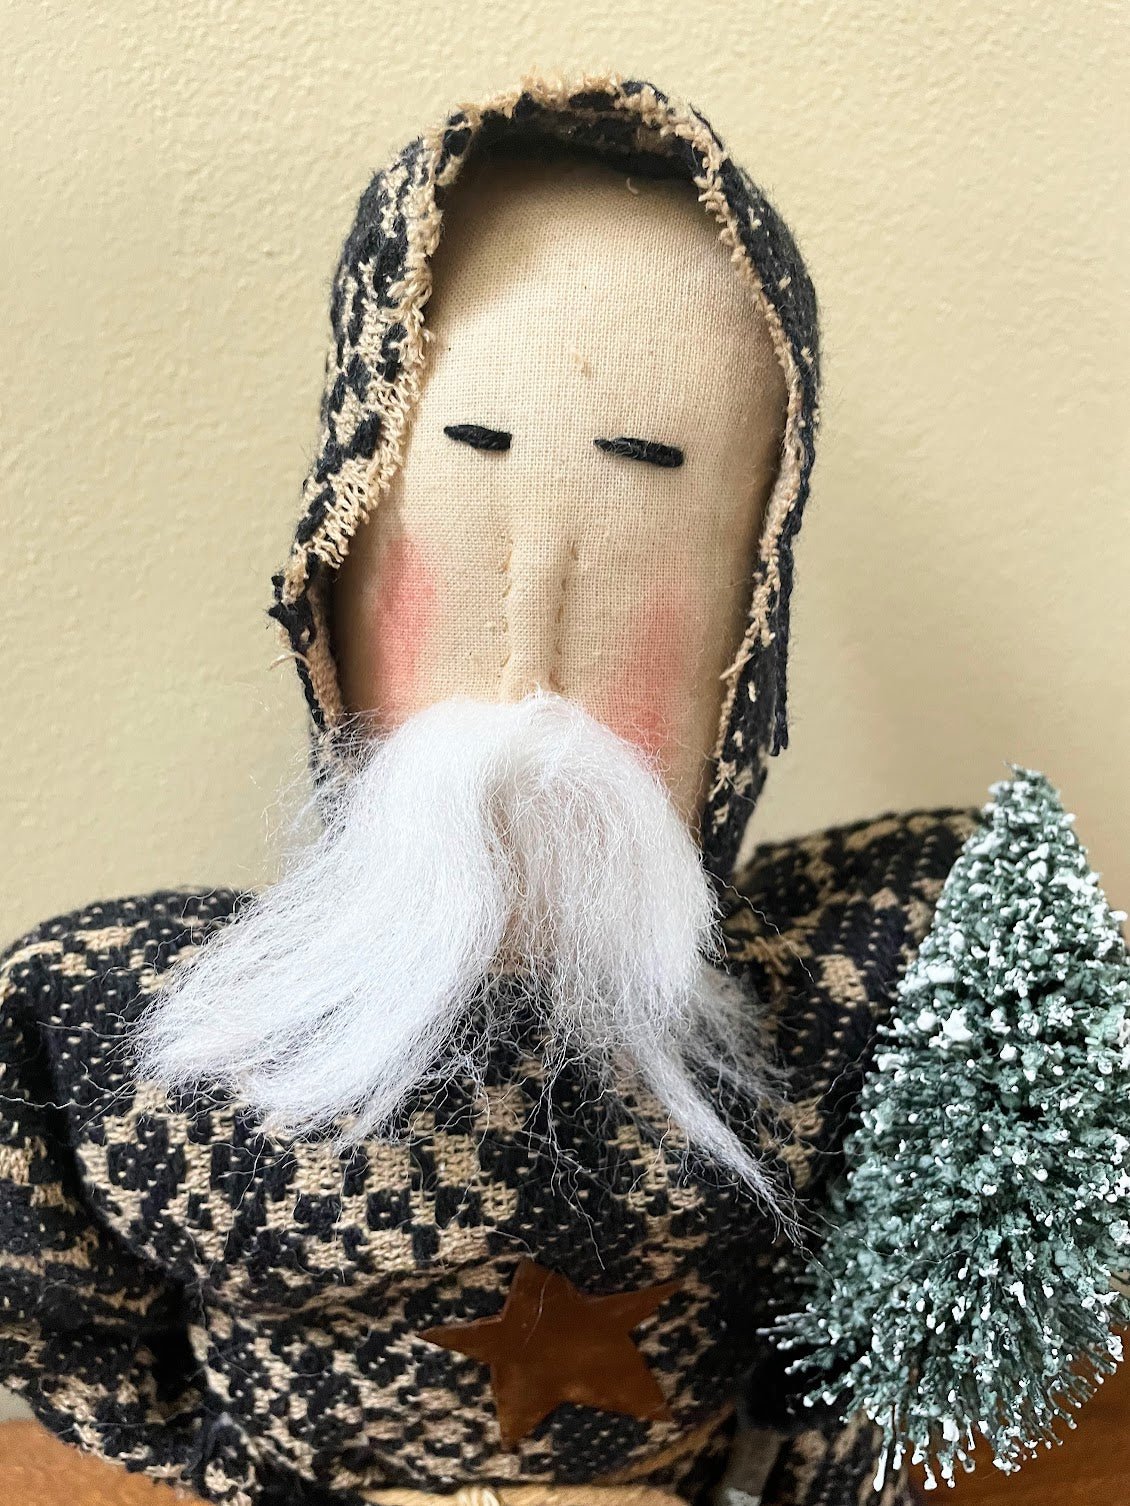 Christmas Handmade Kris Kringle Stump Santa Doll w/ Prim Black Coverlet - The Primitive Pineapple Collection